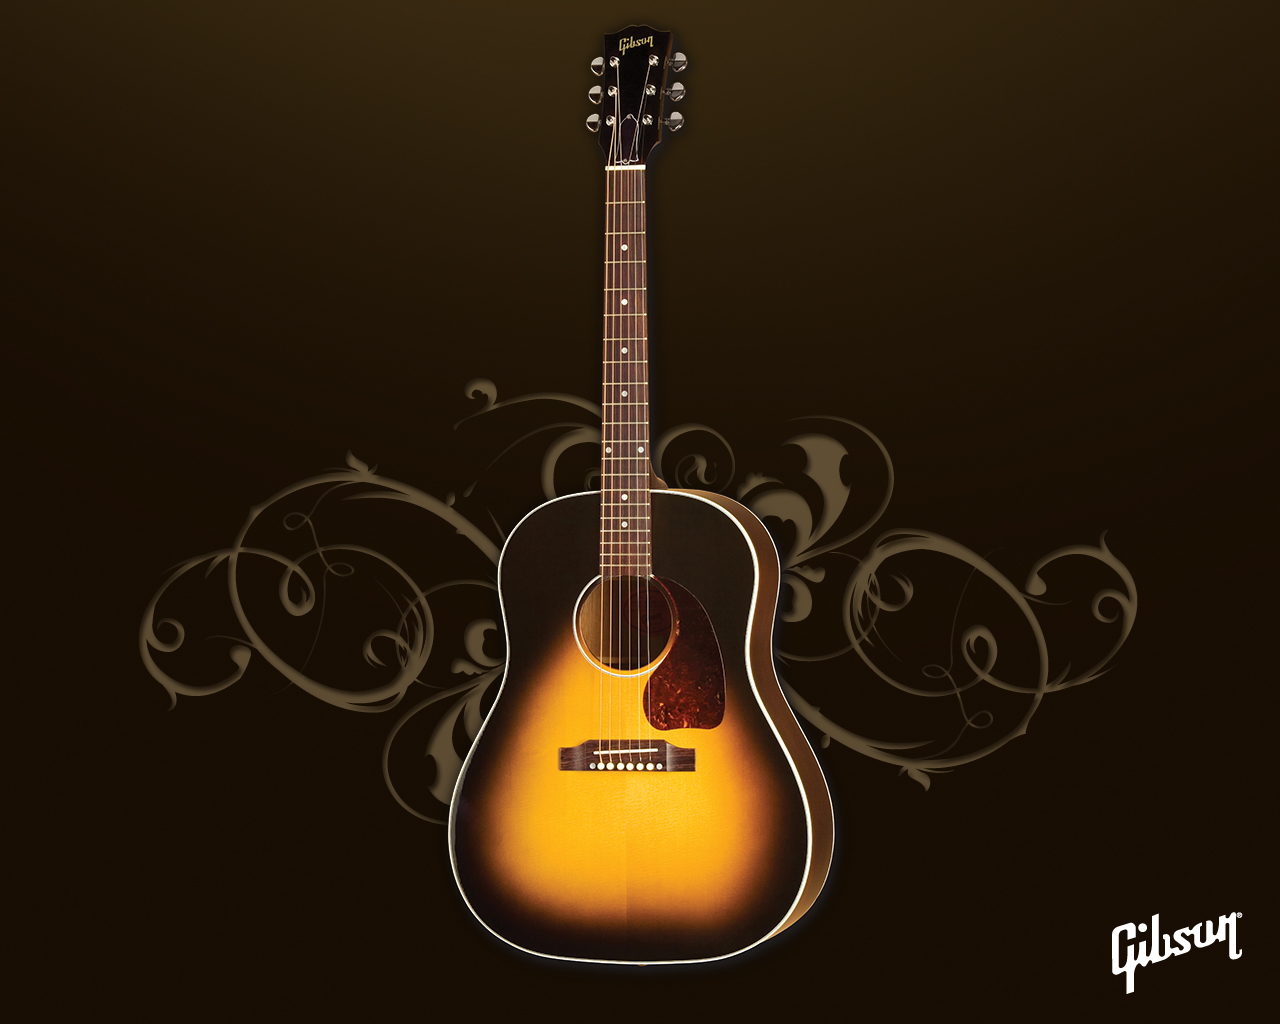 Fuentes De Informaci N Wallpaper Guitarras Gibson